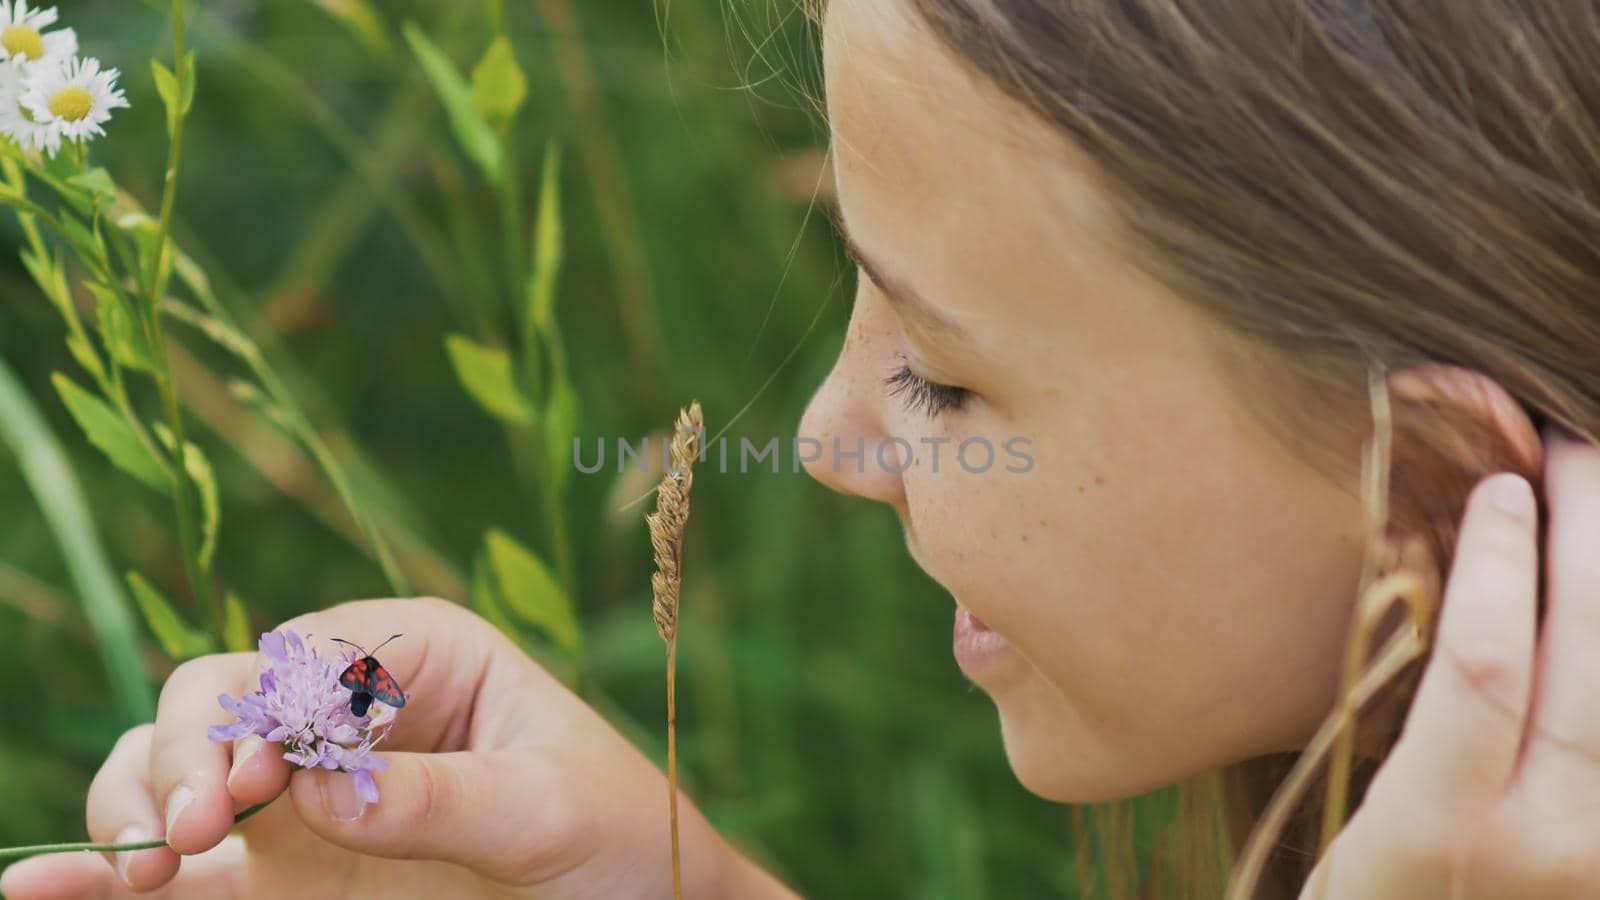 Teenage girl admires a moth on a flower. Warm summer day